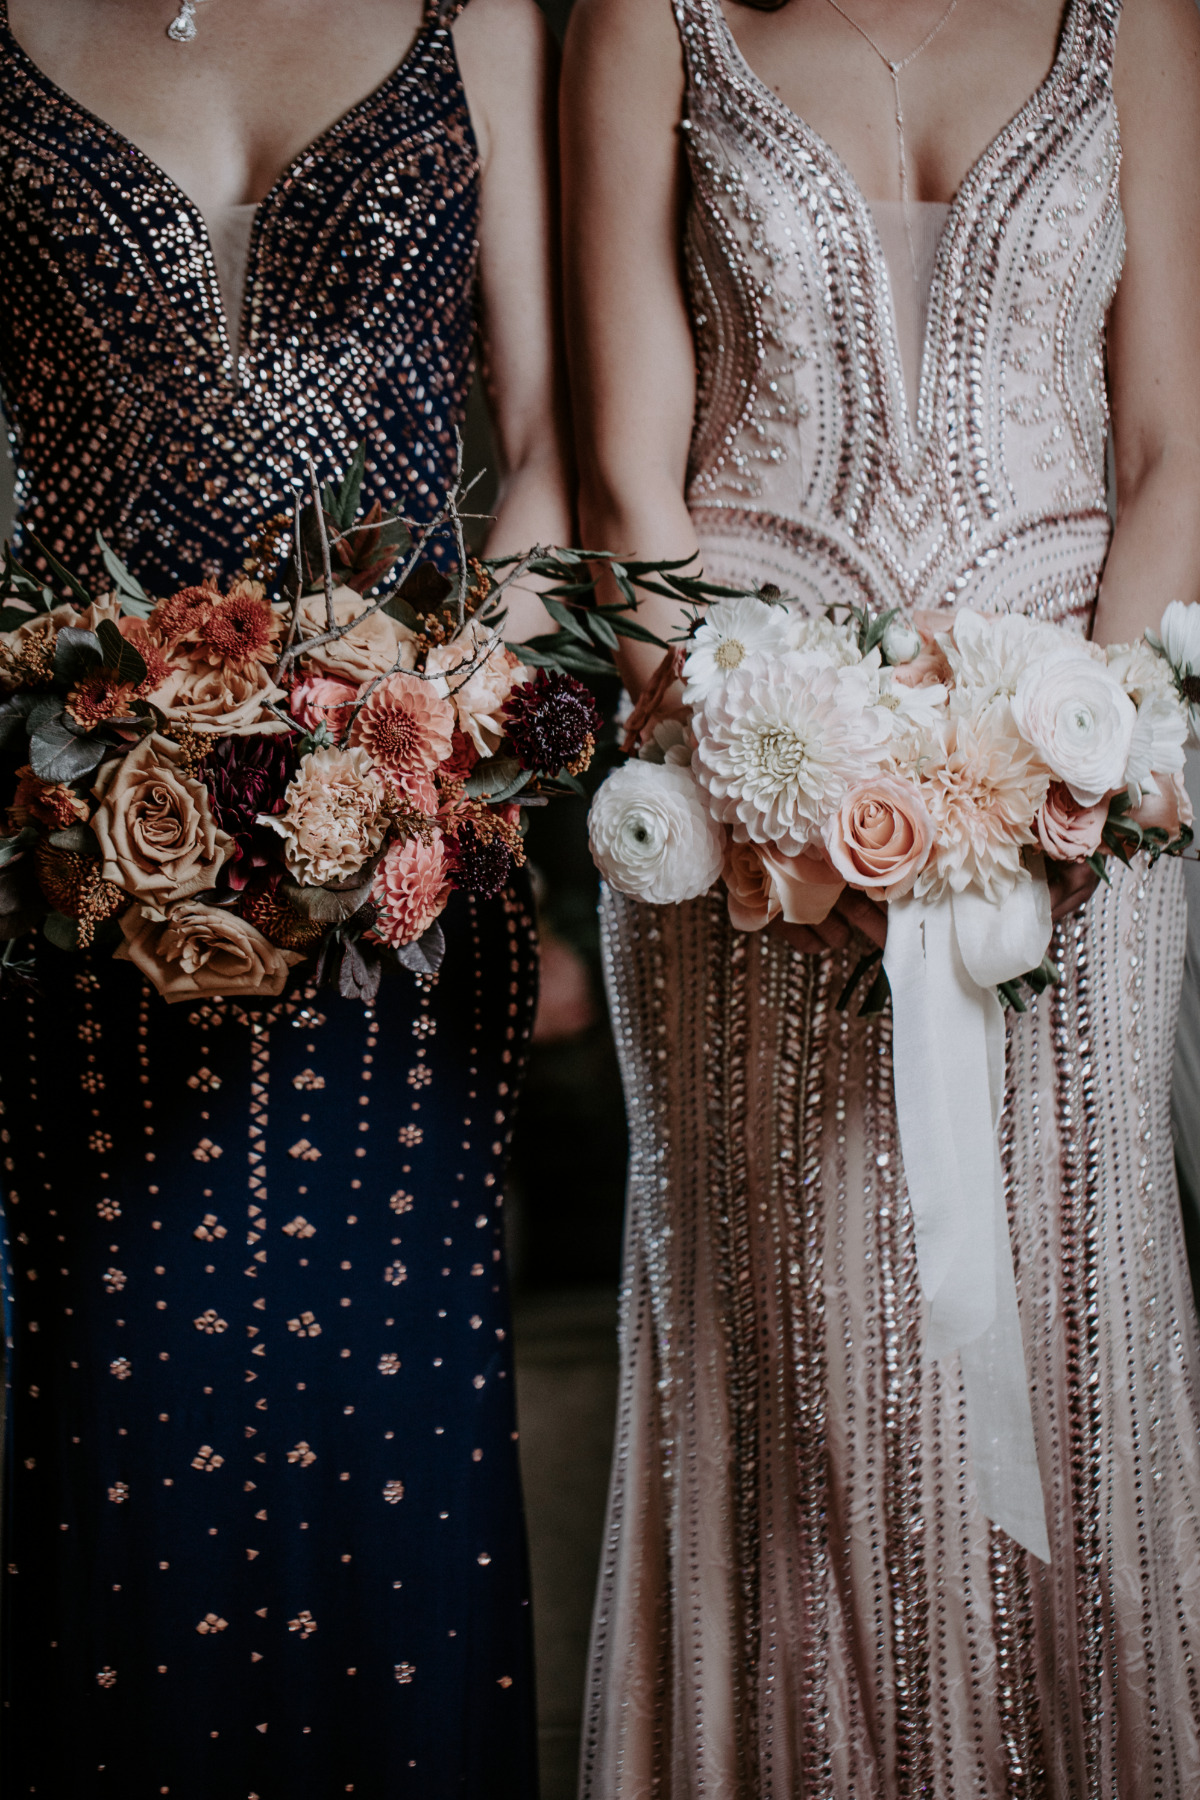 Beaded wedding dresses from Mary's Bridal